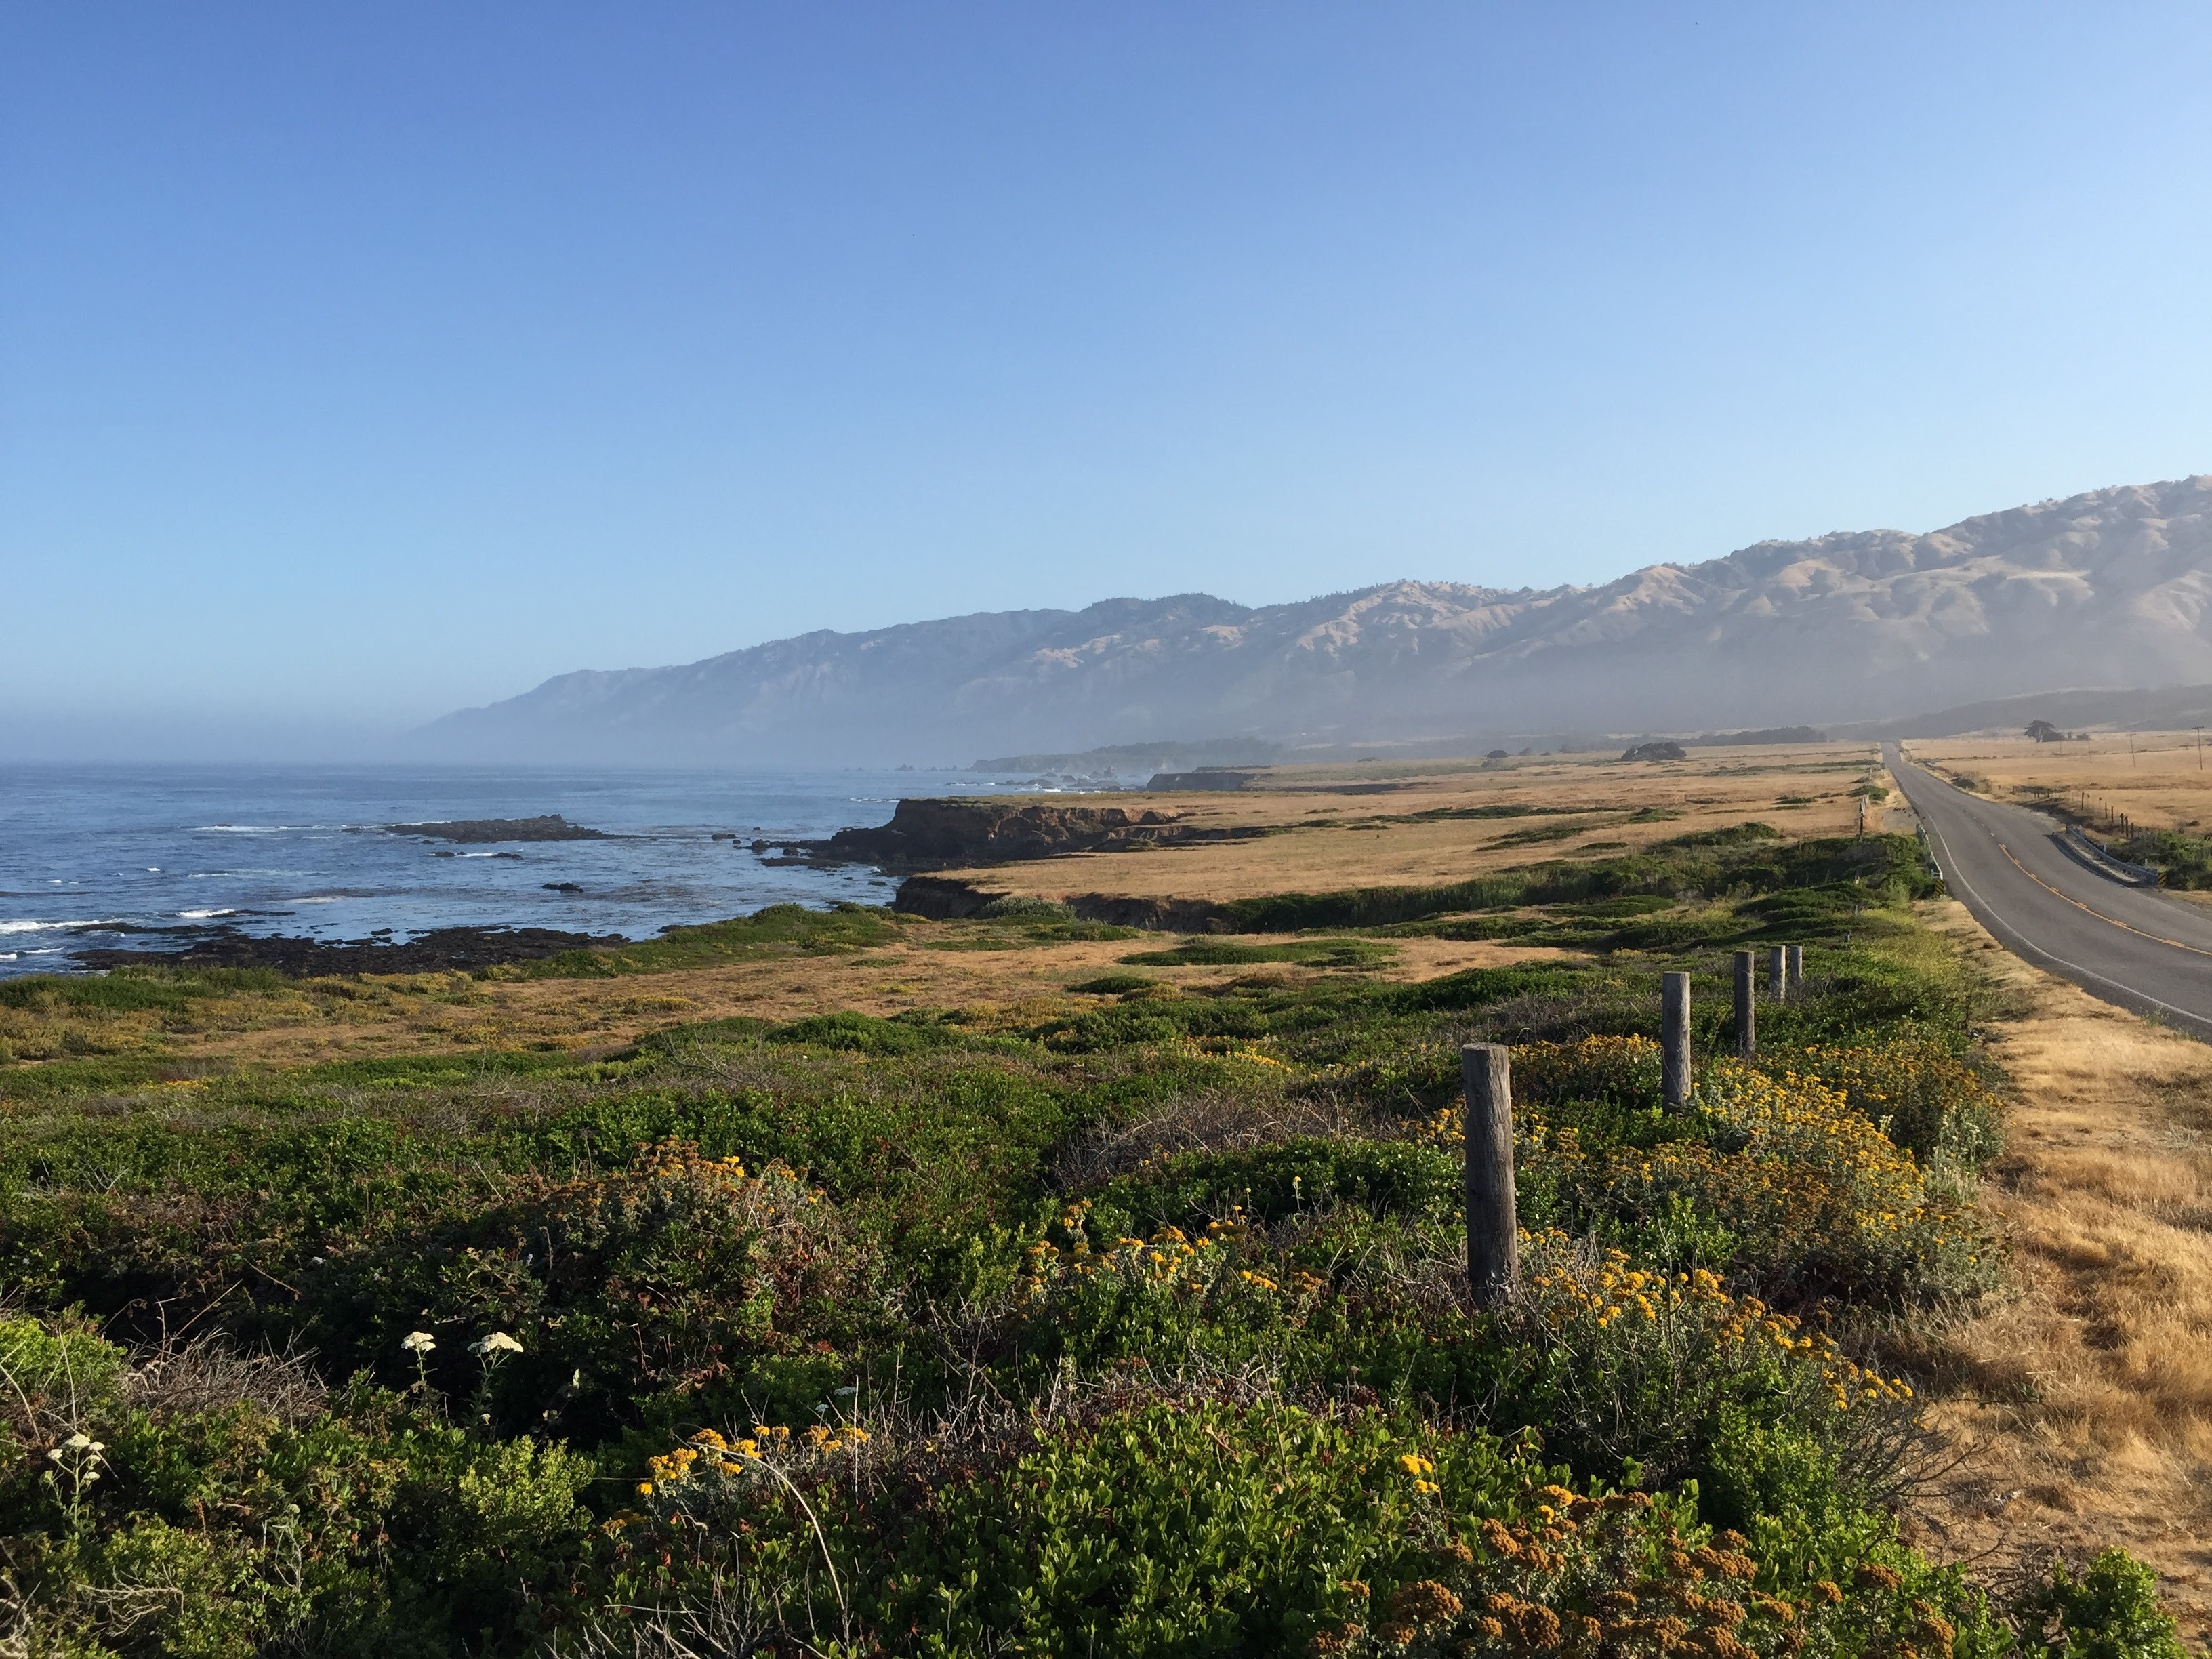 Near San Simeon, view looks north up Highway 1 along the California coast toward Big Sur